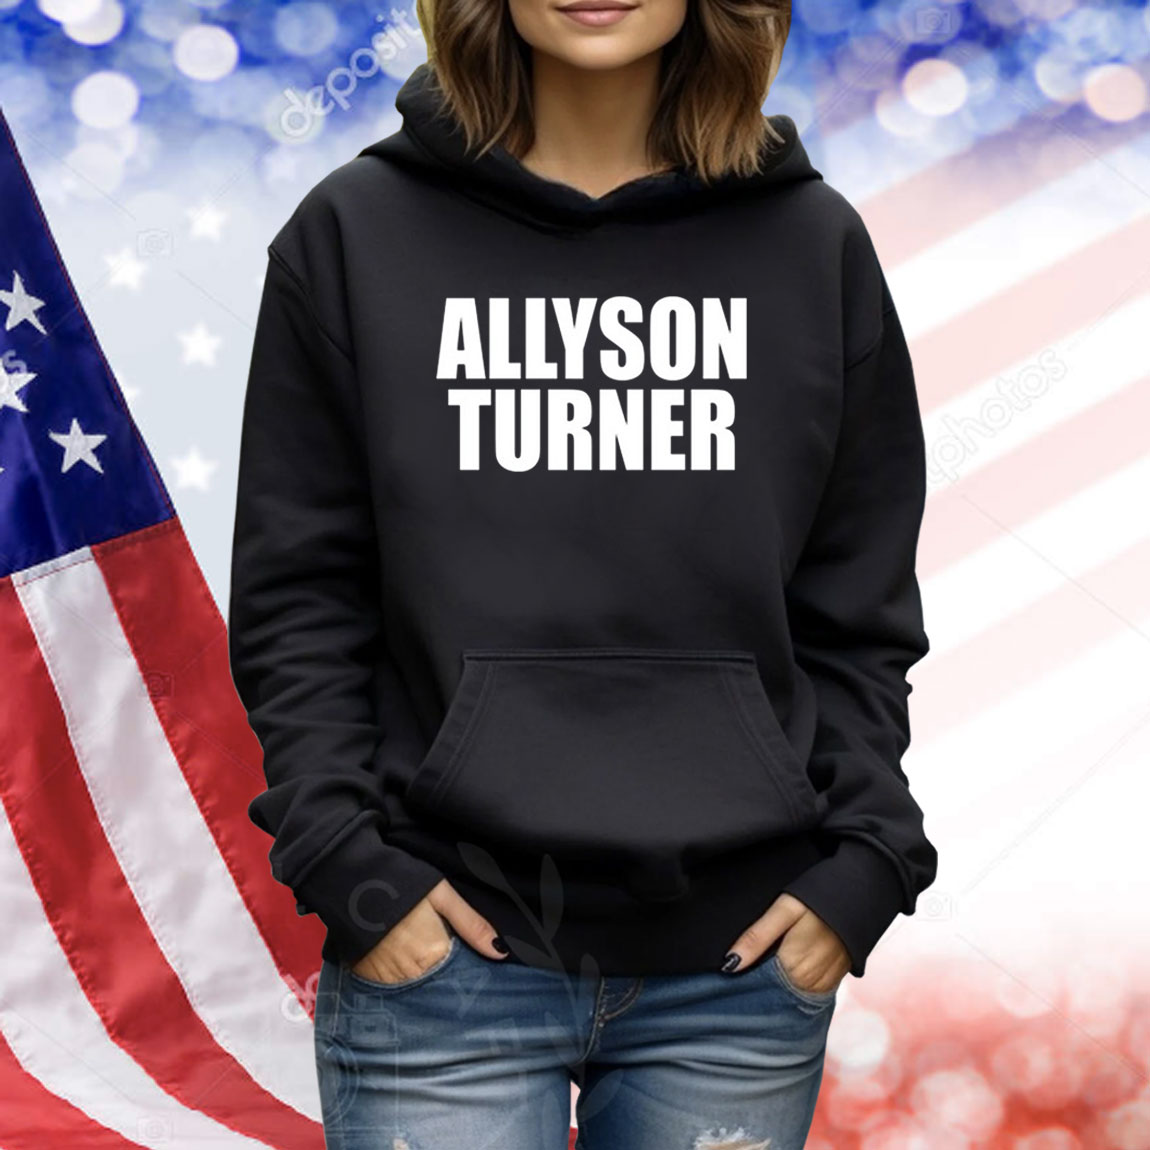 Lucy Rohden Allyson Turner TShirts